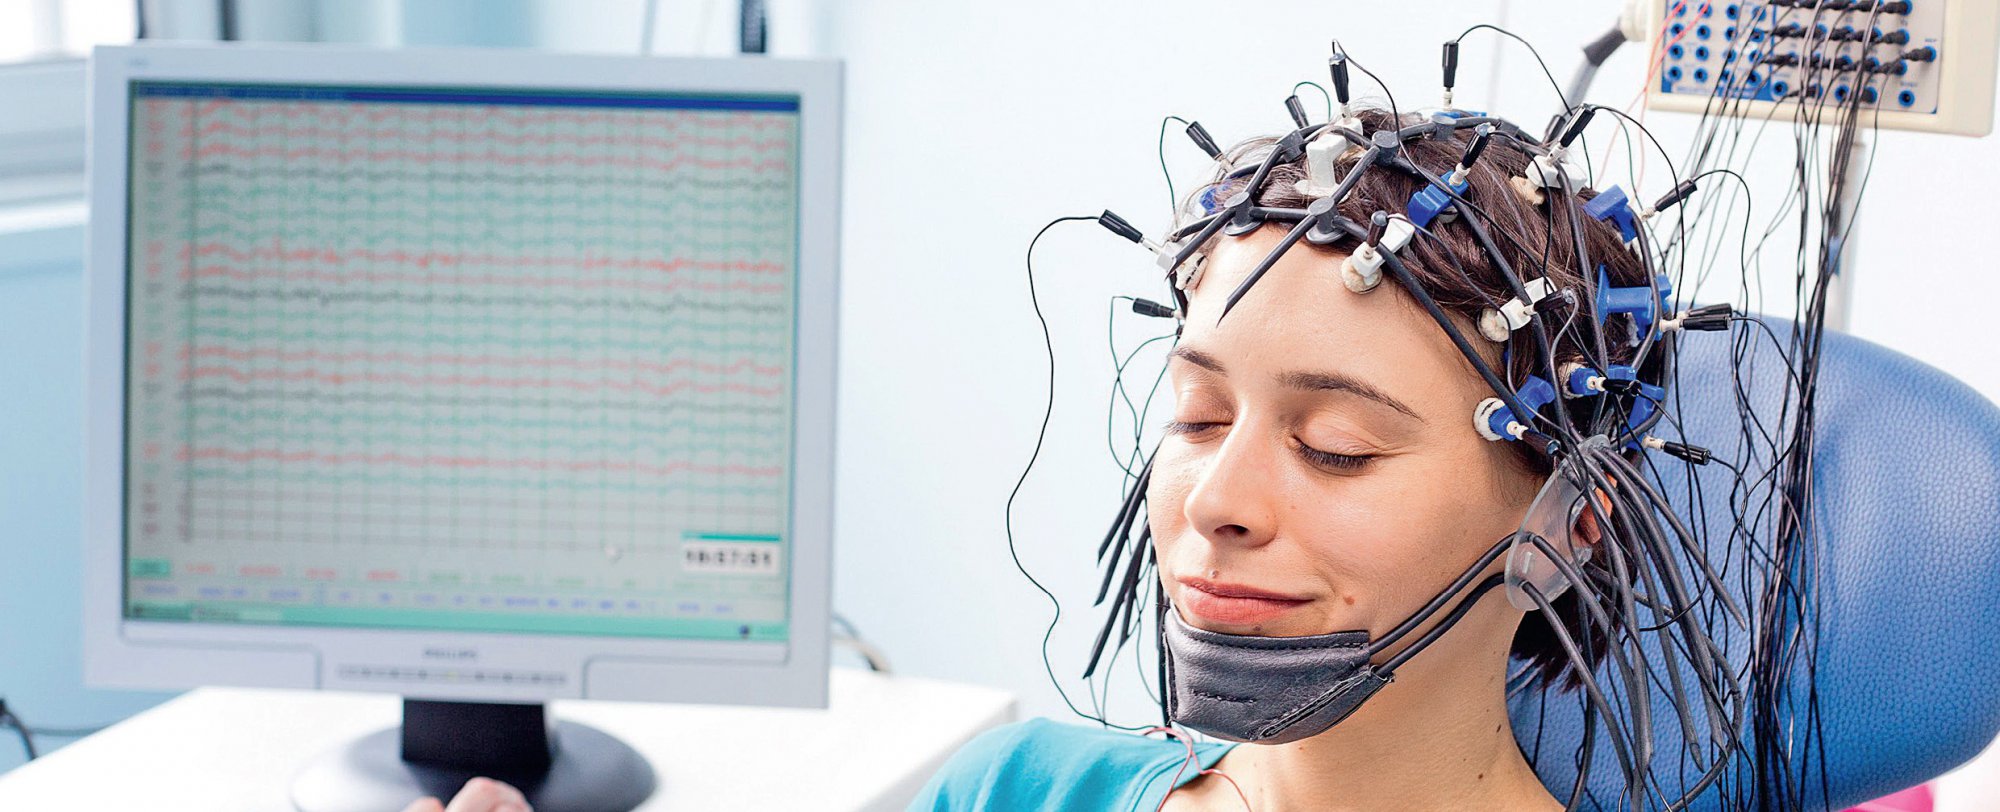 Компьютерная ээг. Энцефалограмма головного мозга. РЭГ И ЭЭГ. Электроэнцефалография (ЭЭГ). Электроэнцефалография головного мозга (ЭЭГ).